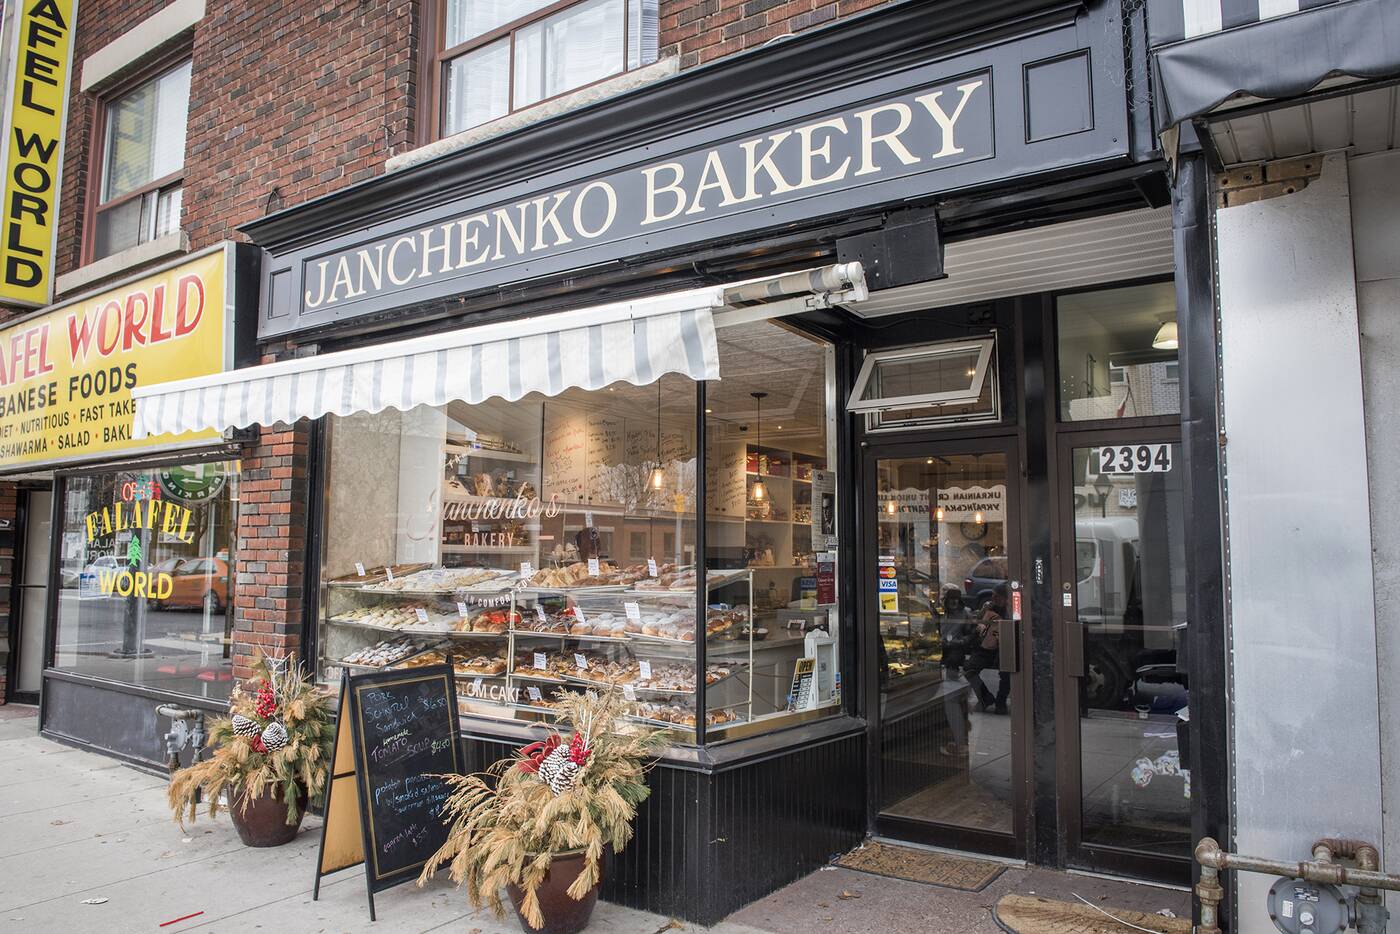 Janchenko Bakery Toronto